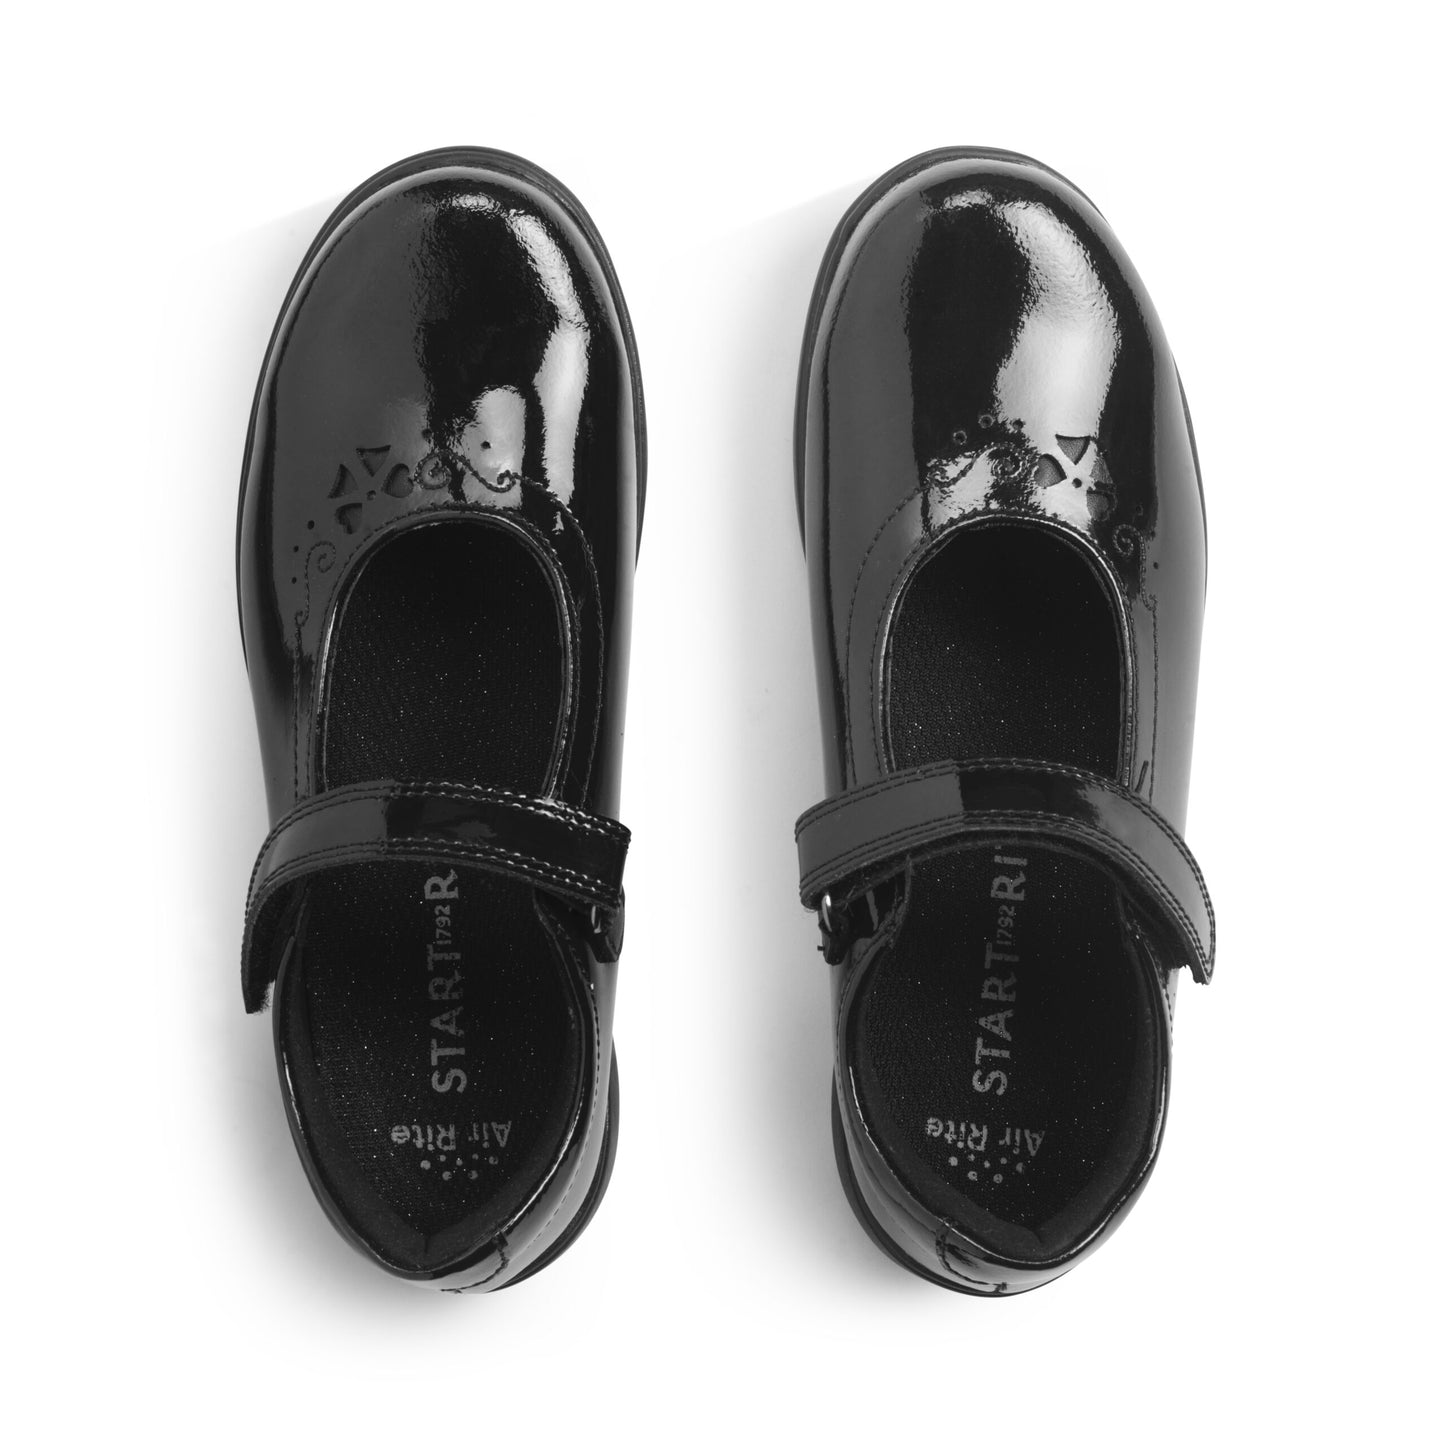 Glisten Black Patent Leather T-Bar Girls School Shoe